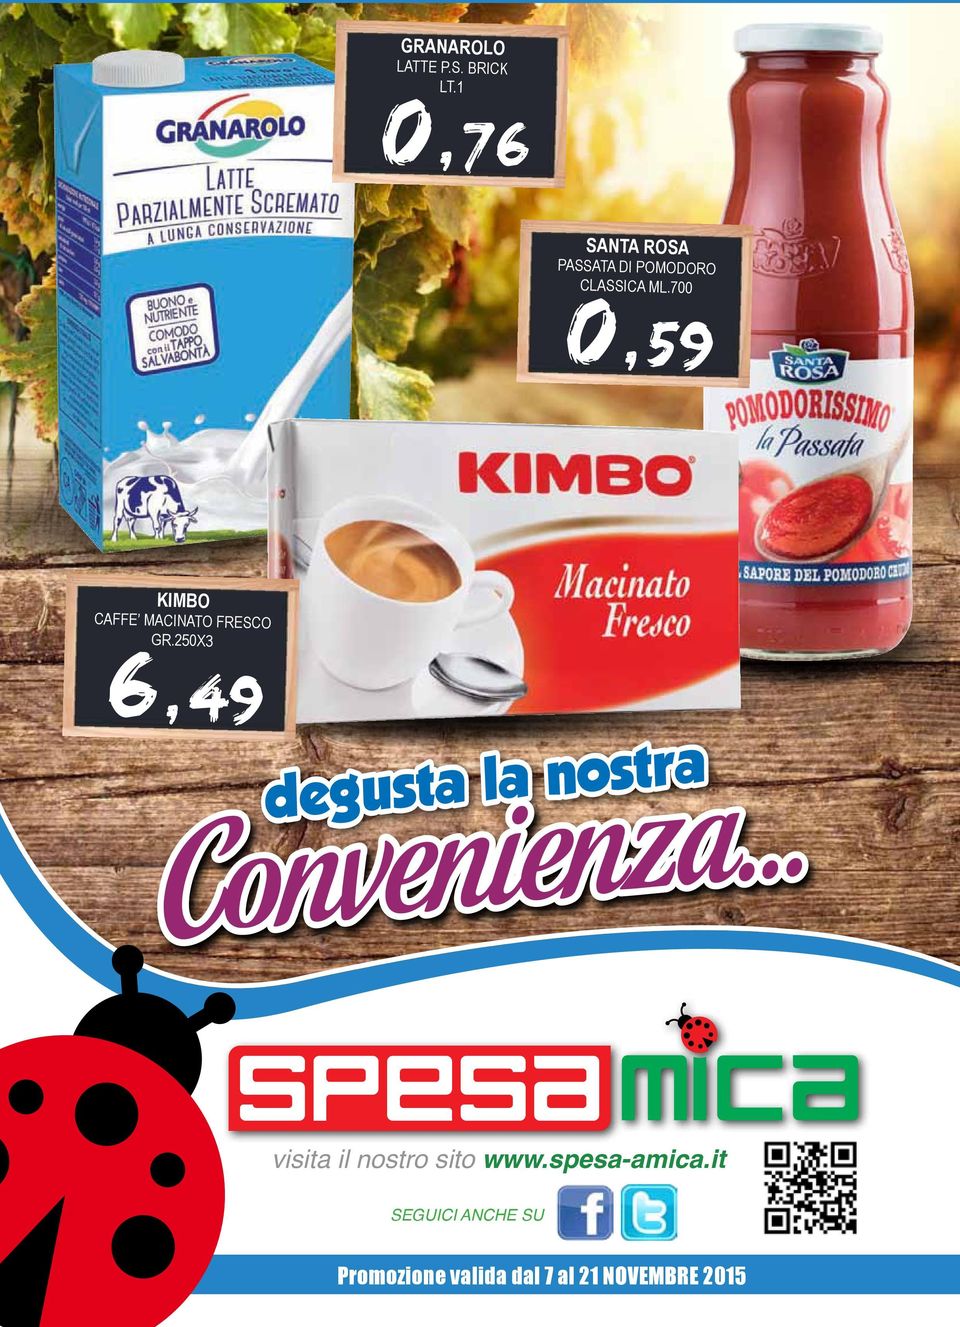 700 0,59 KIMBO CAFFE MACINATO FRESCO GR.